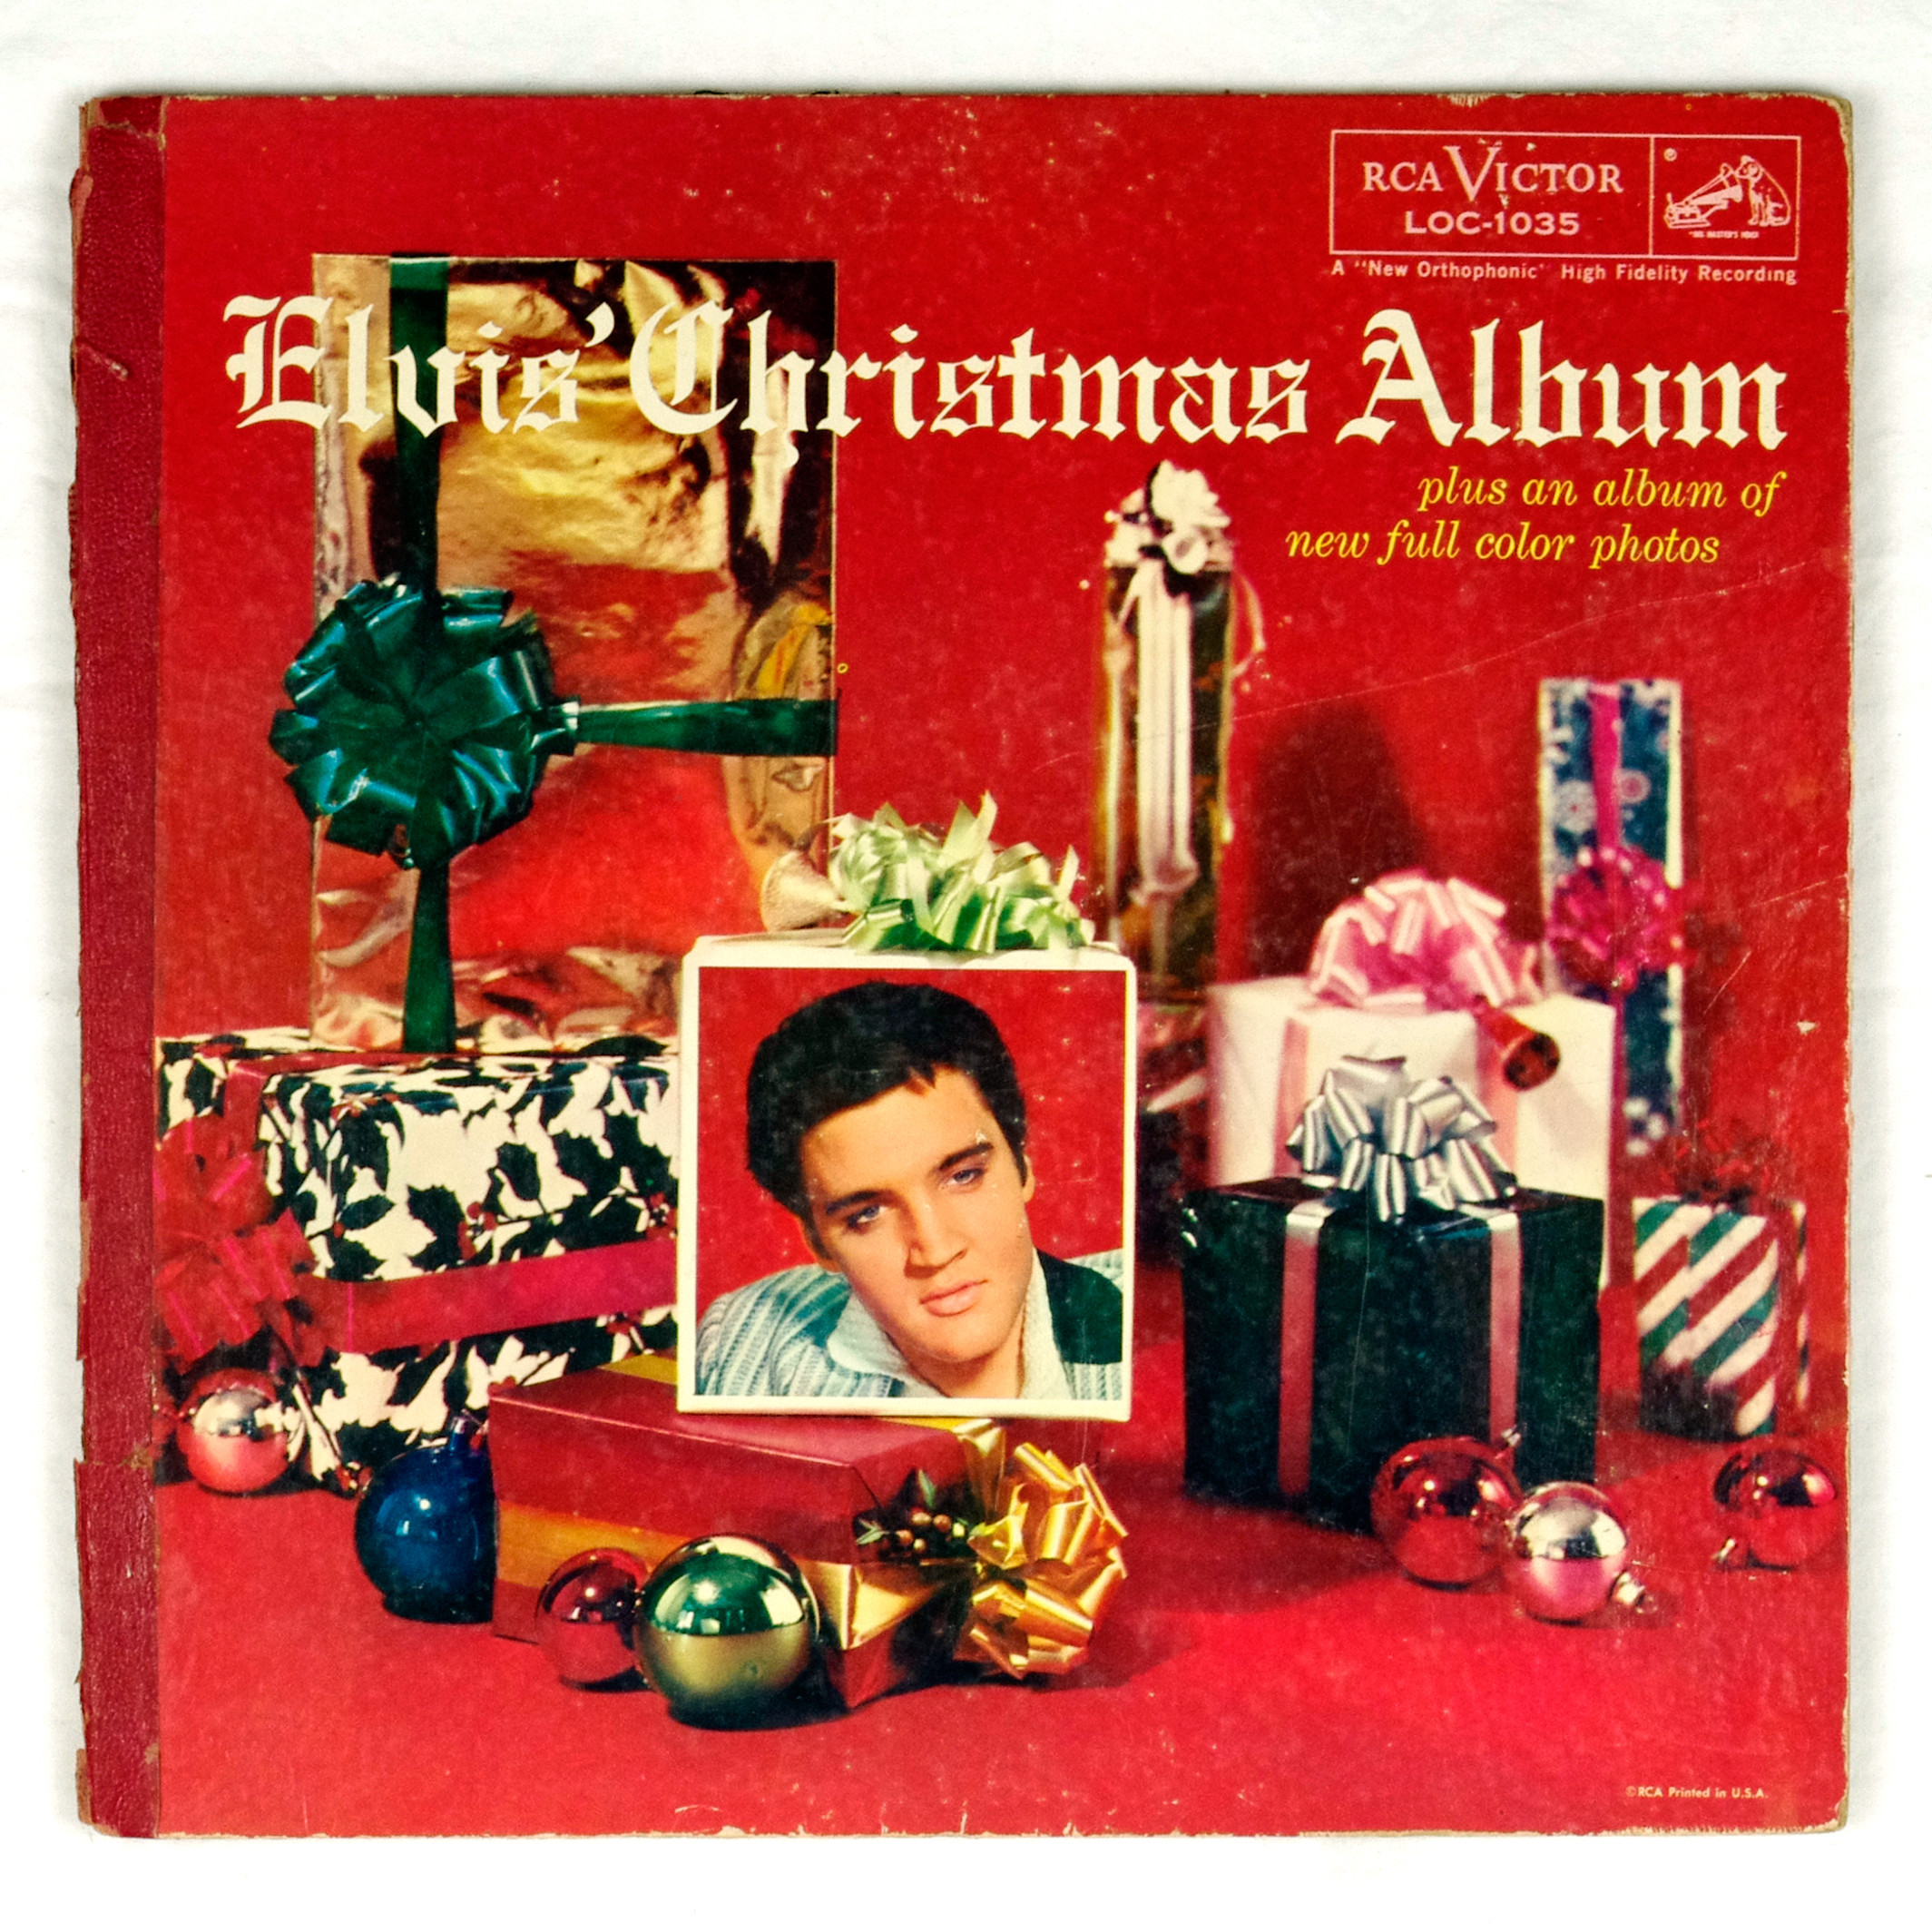 Presley ‎Vinyl Elvis' Christmas Album Vintage Collectibles Poster Ticketstbus Handbills